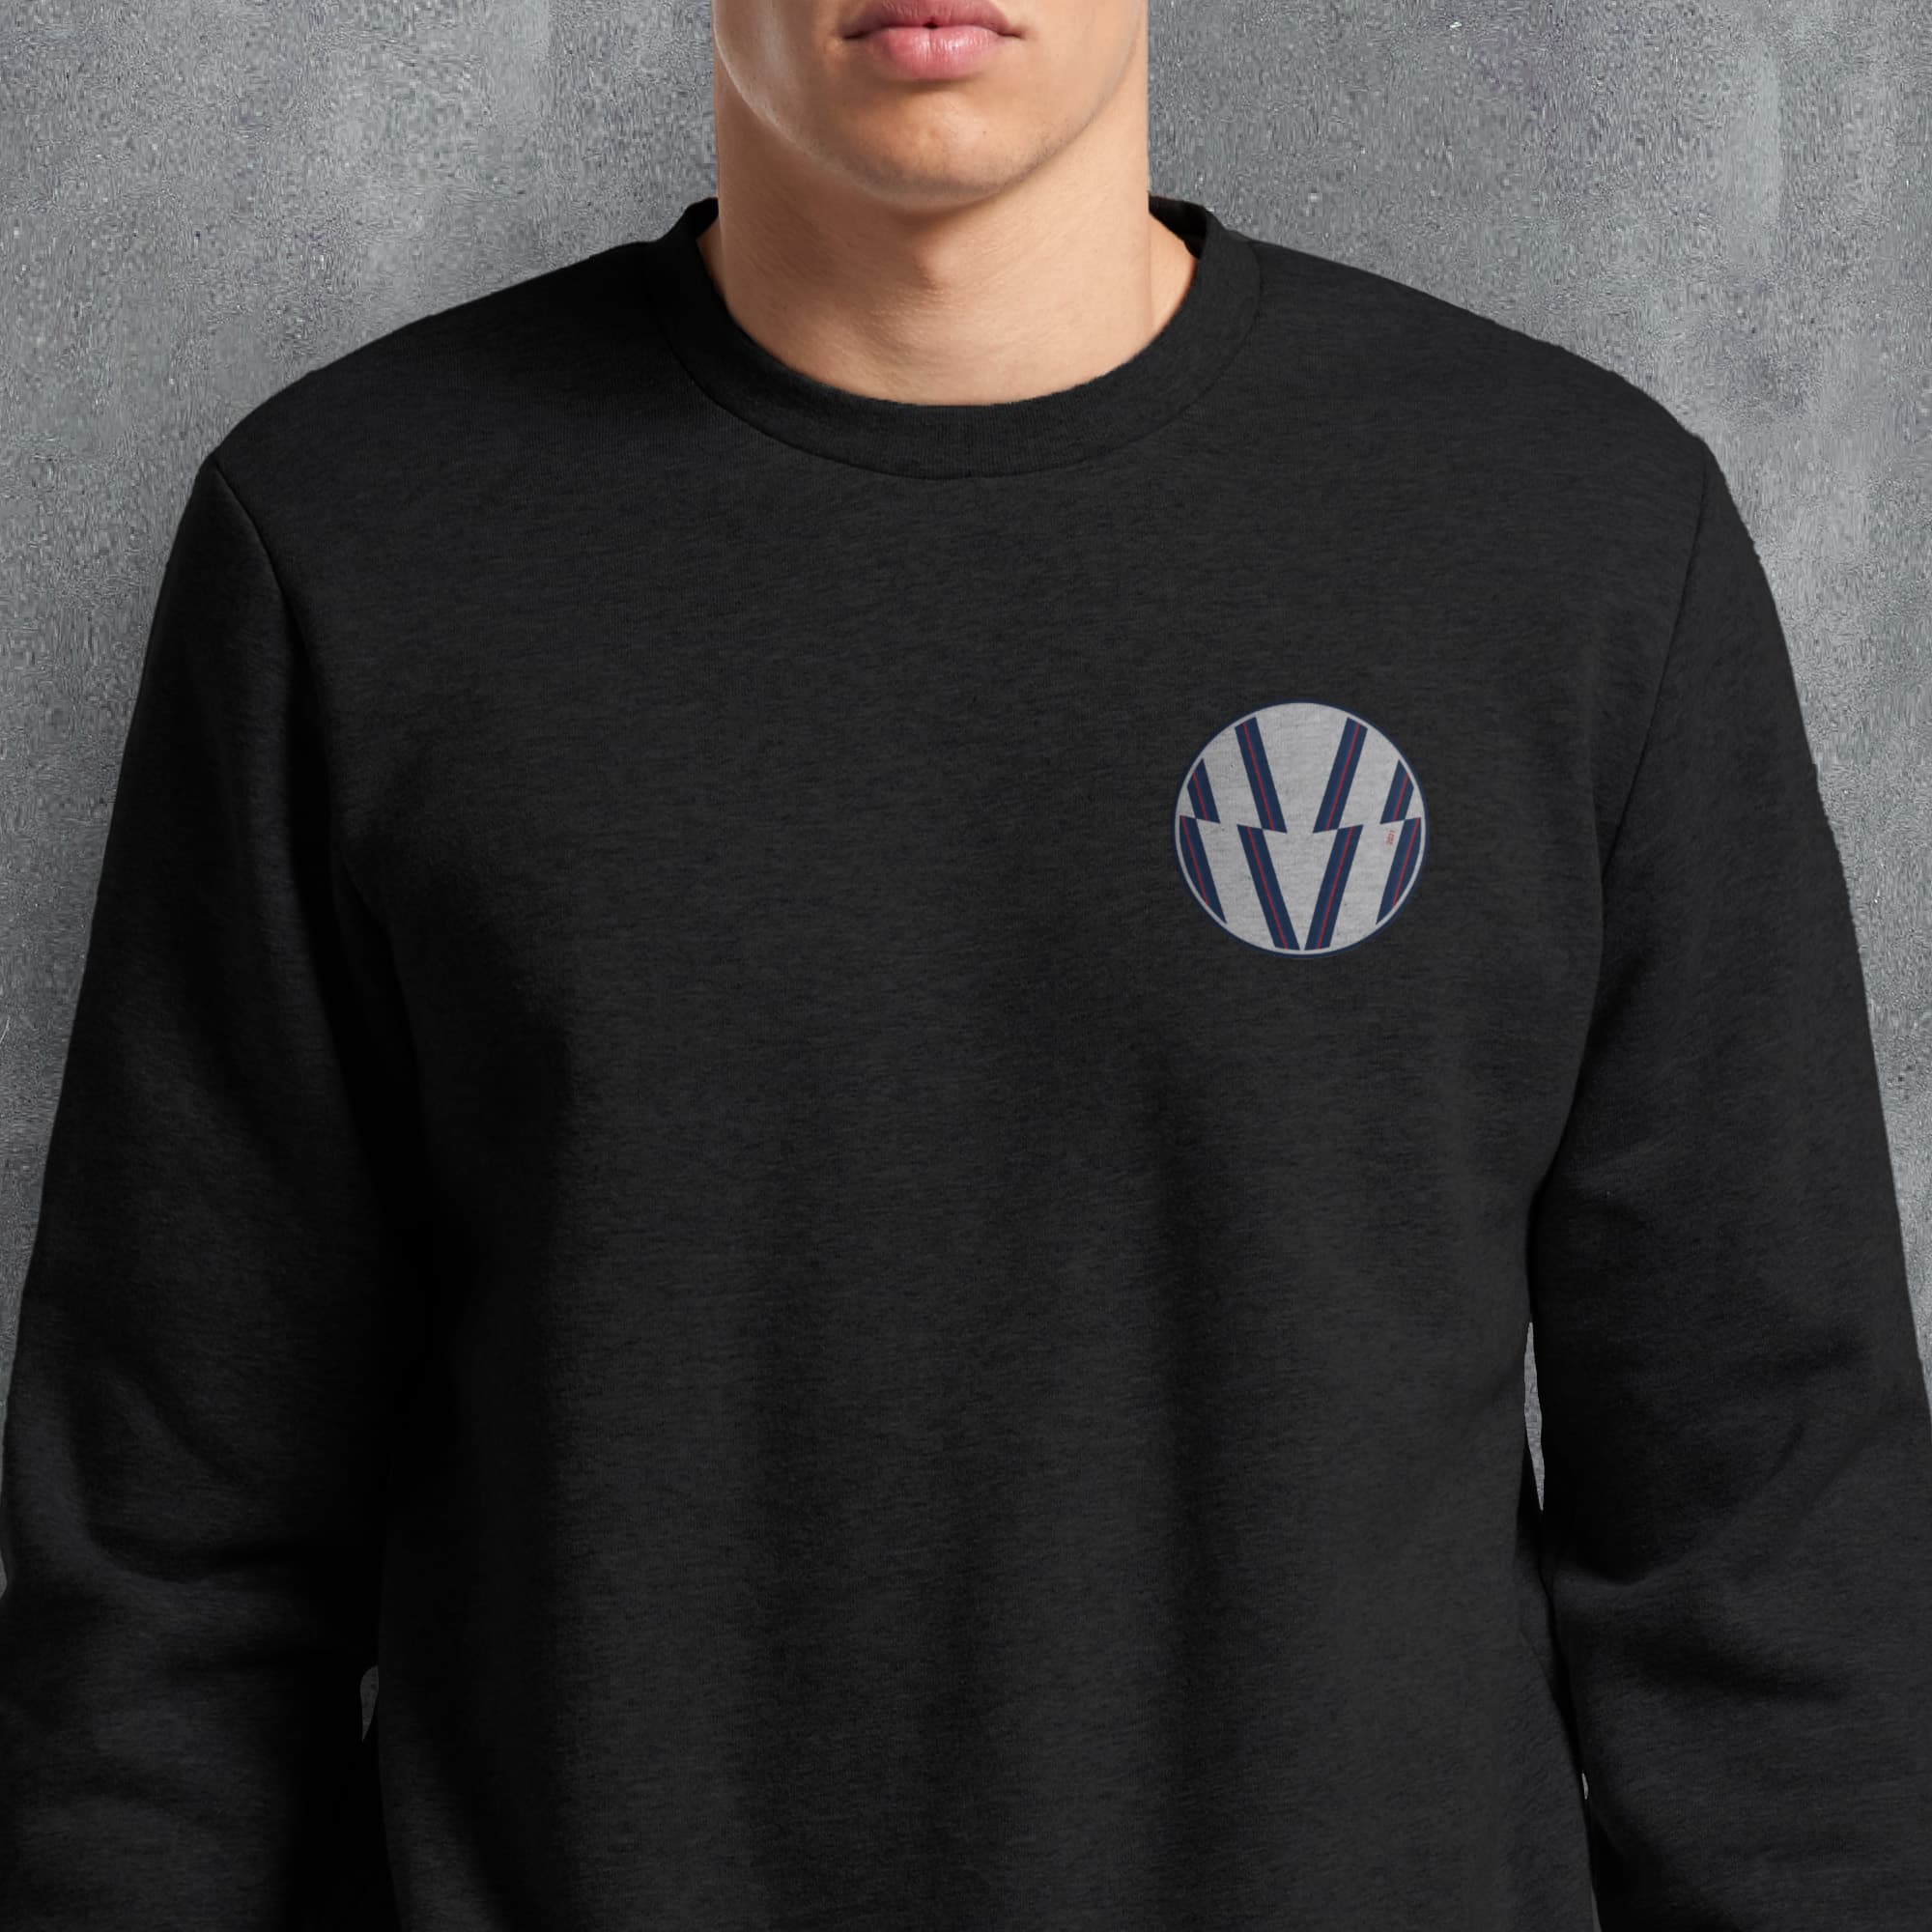 a man wearing a black sweatshirt with a volkswagen emblem on it